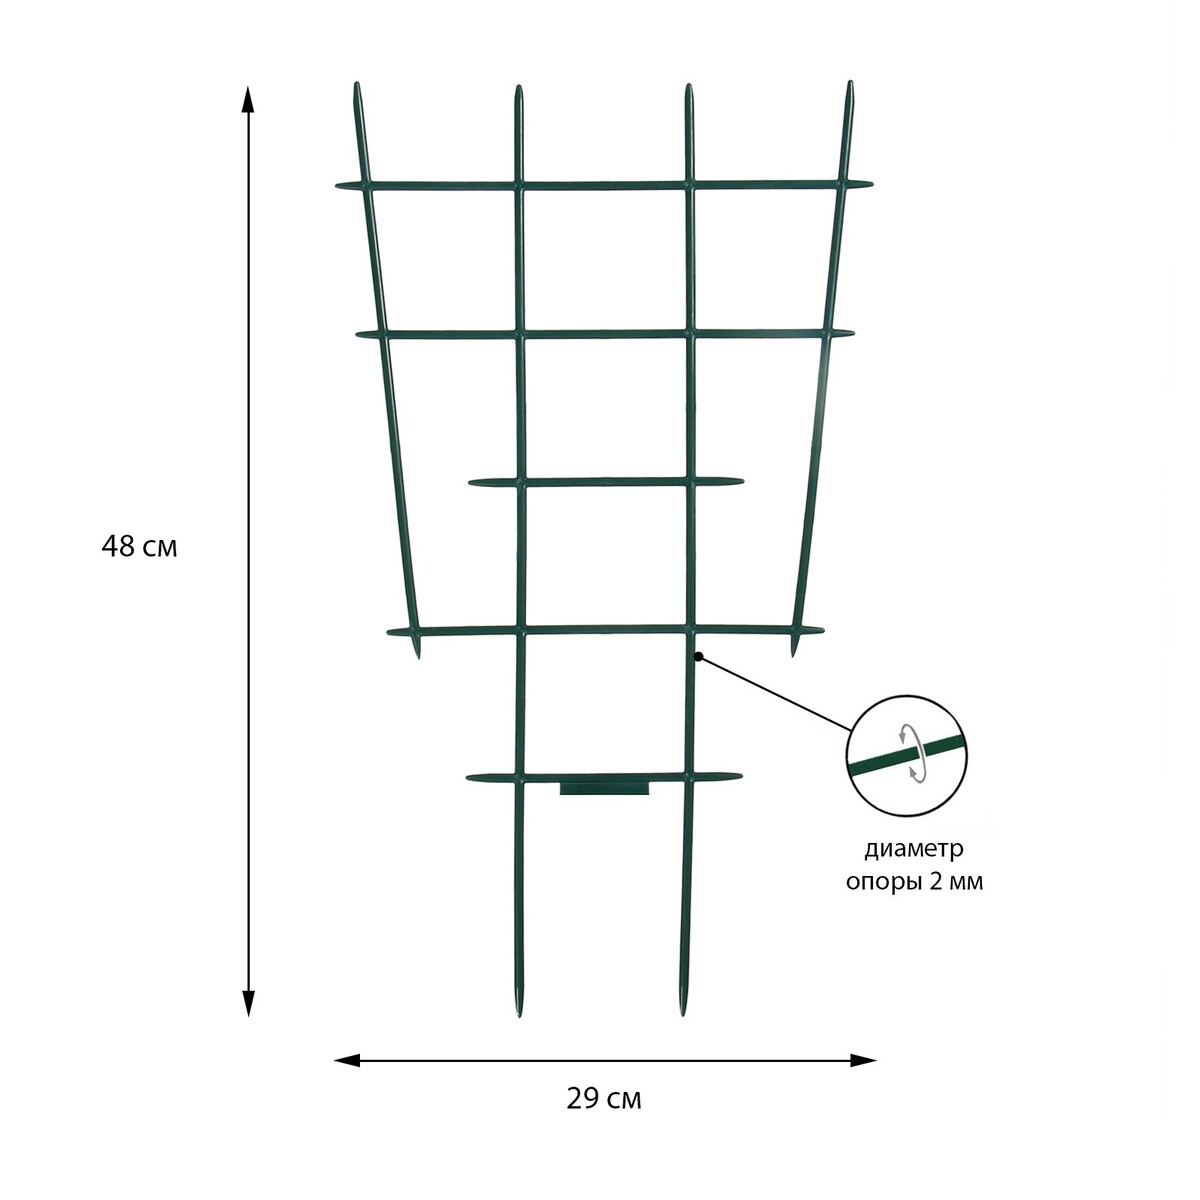 Шпалера, 48 × 29 × 0.2 см, пластик, зеленая, greengo подставка для столовых приборов пластик 11х18х17 см зеленая mv19040